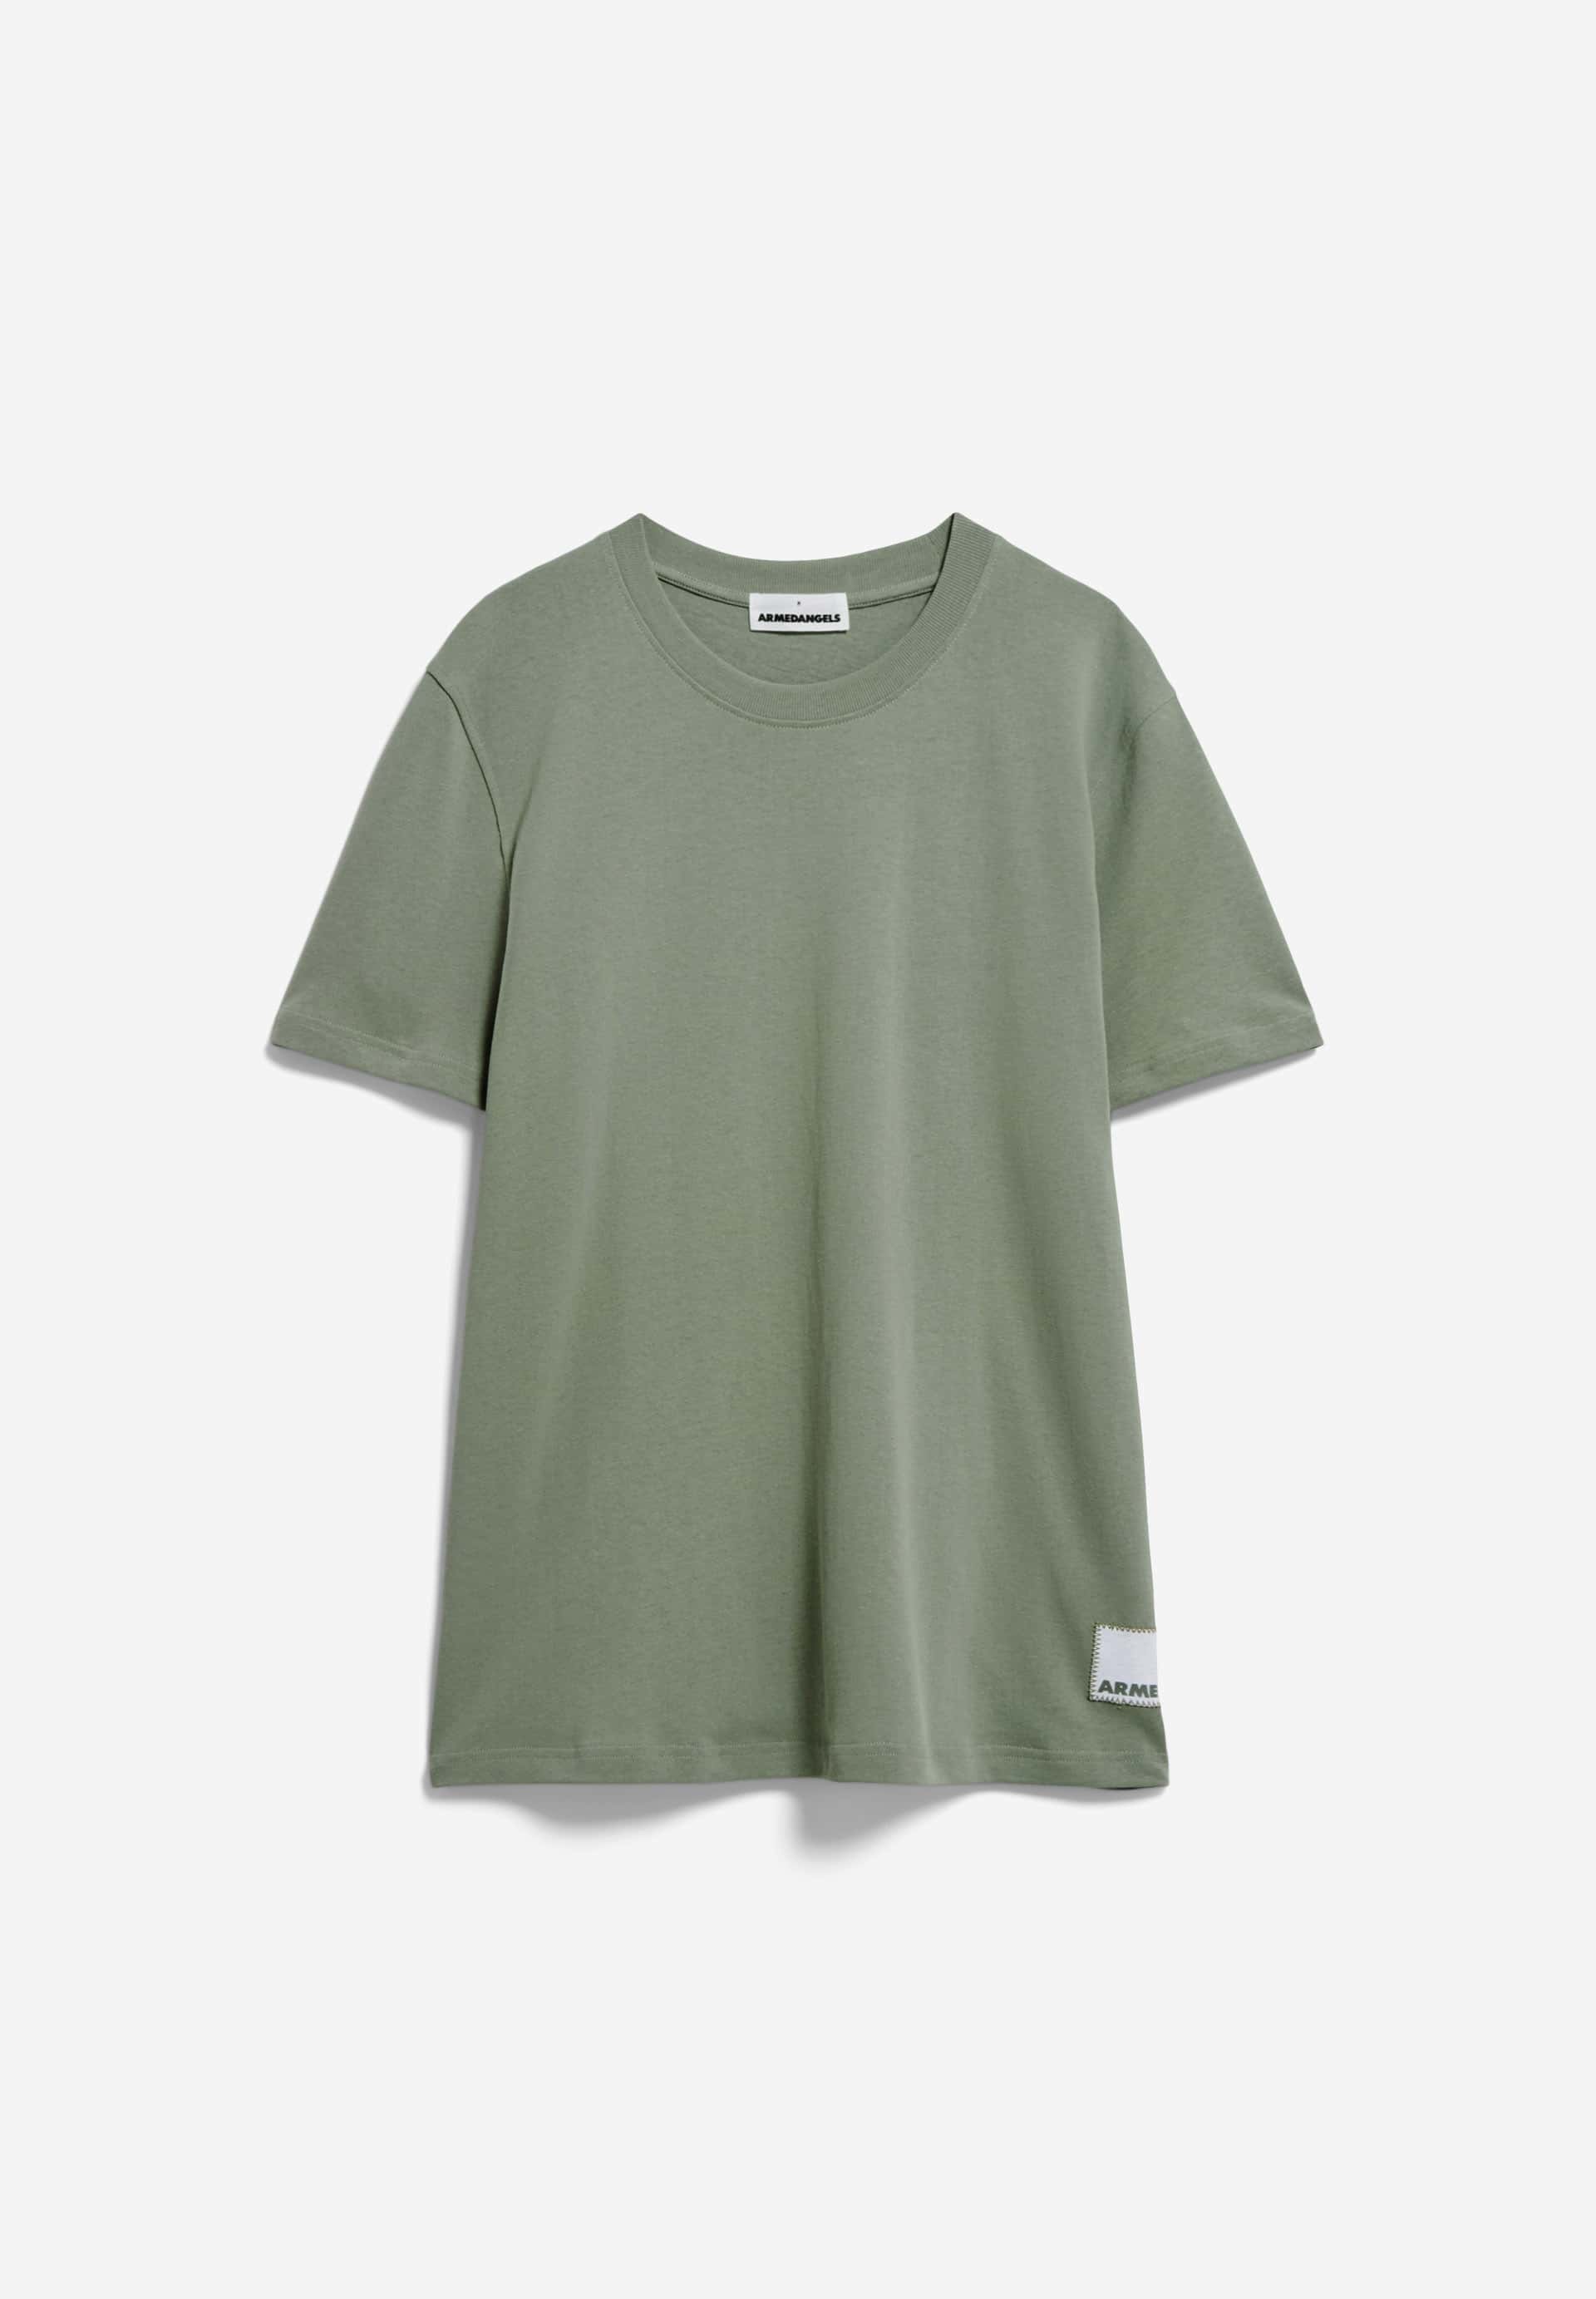 MAARKOS PATCH Heavyweight T-Shirt Relaxed Fit made of Organic Cotton Mix